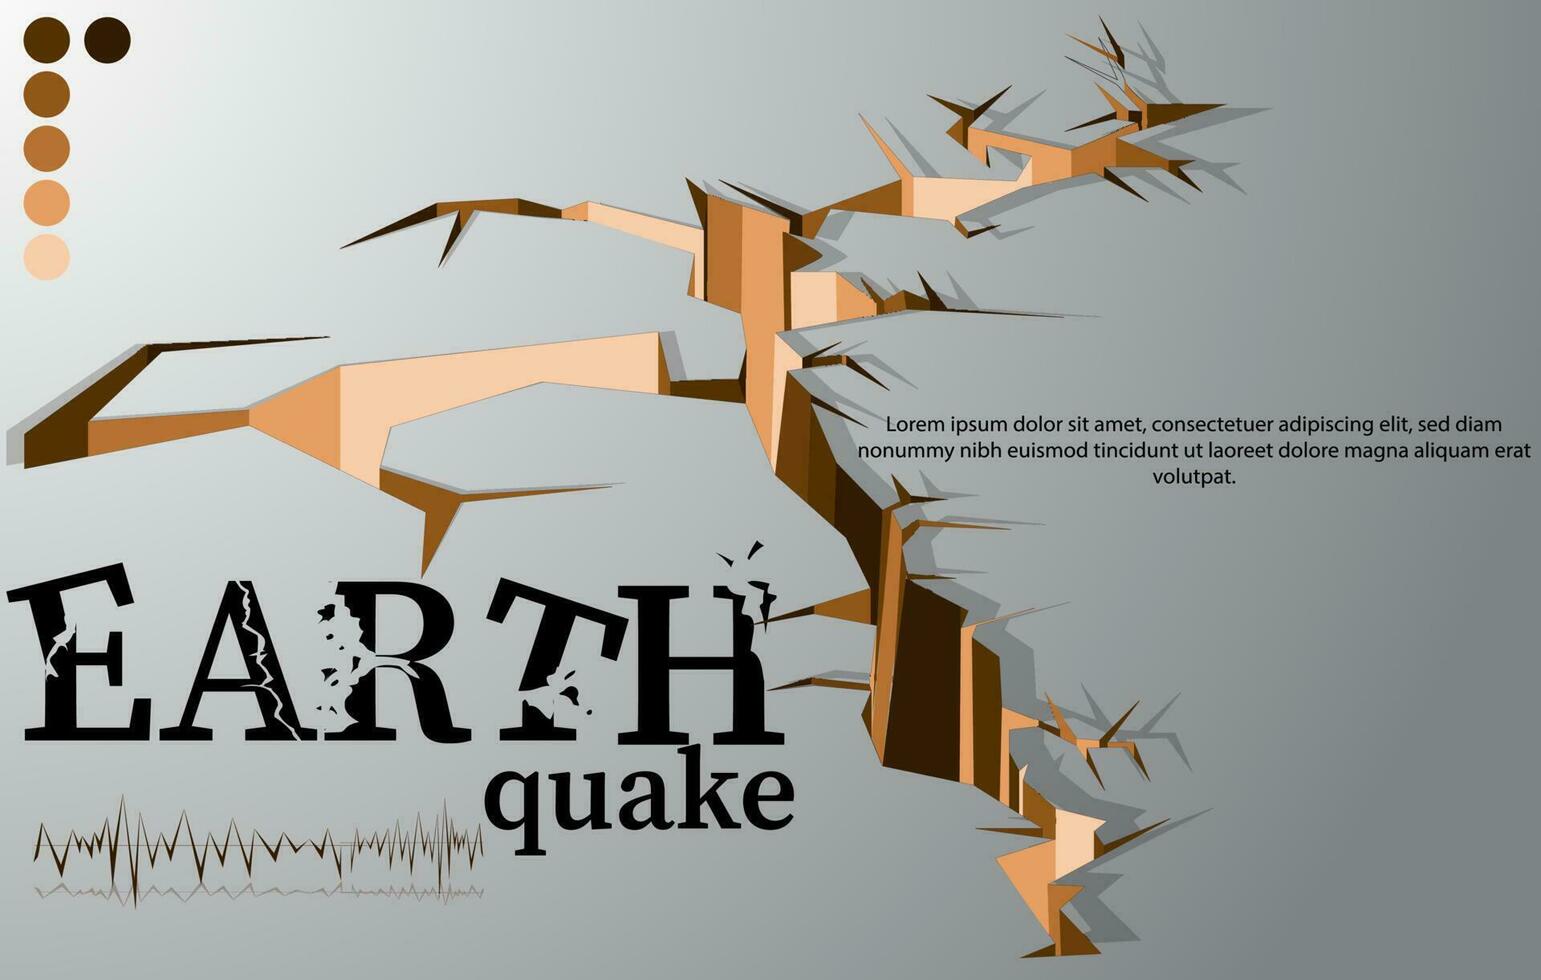 tremor de terra vetor ilustração terra rachaduras e sísmico ondas